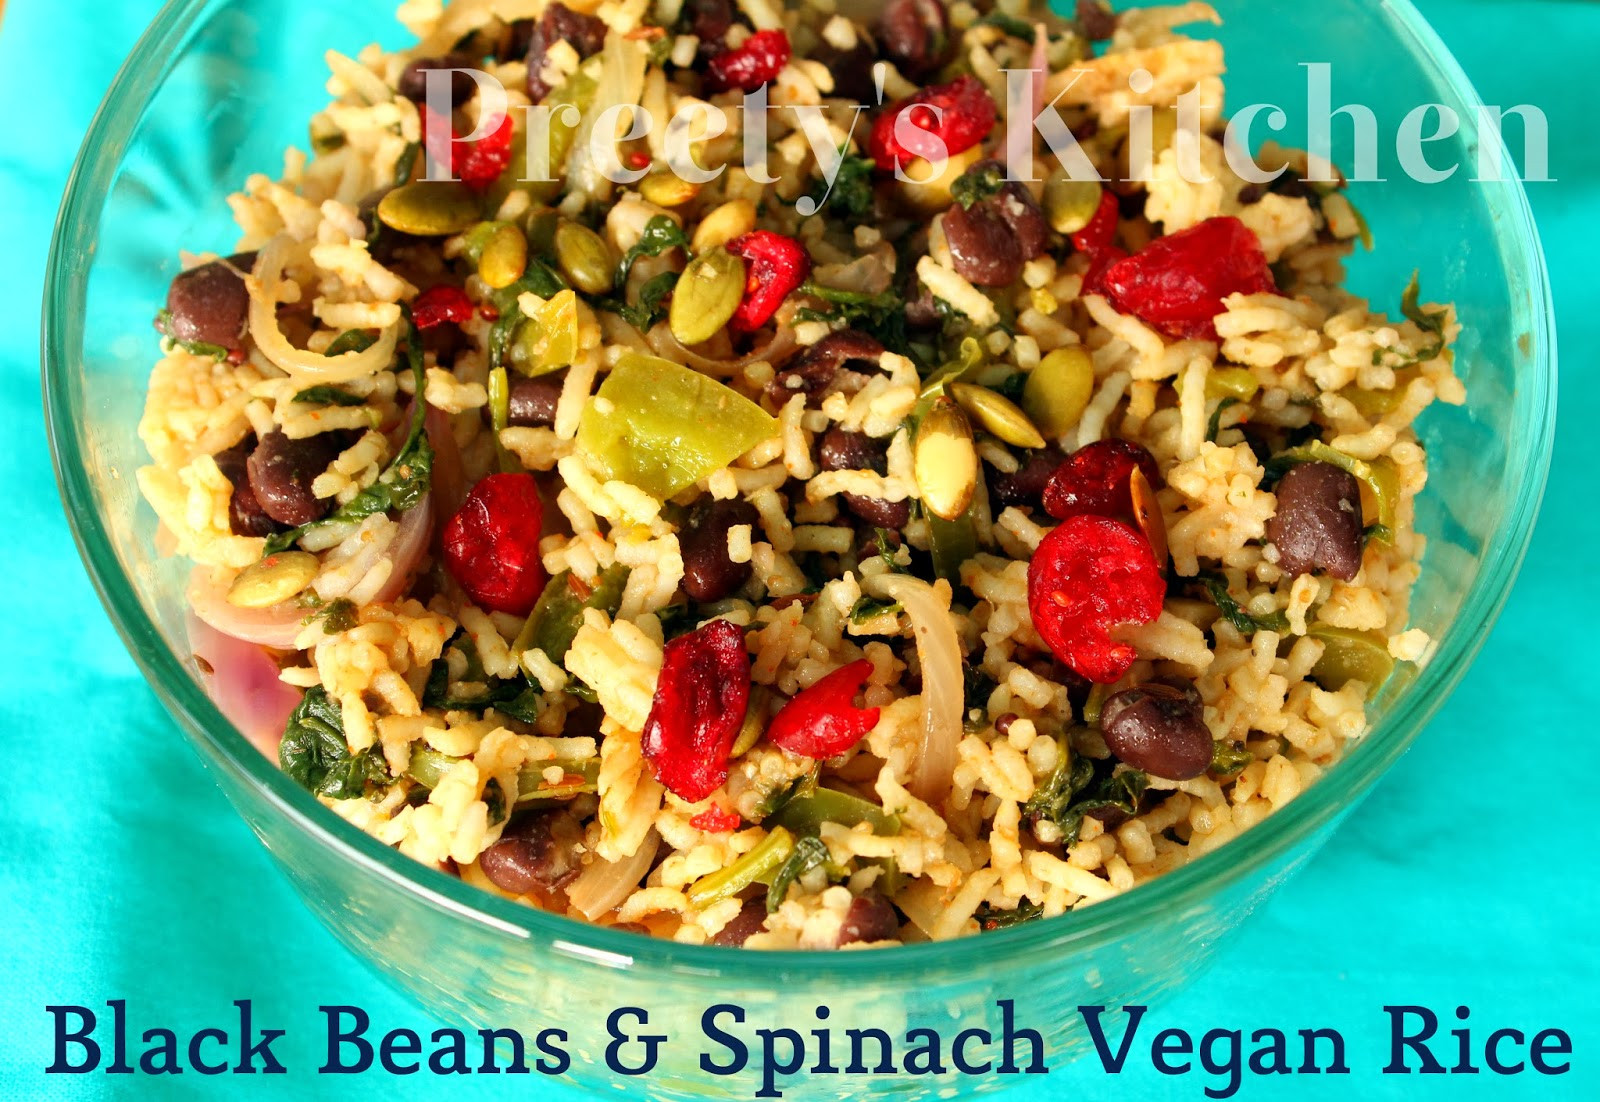 Vegan Black Beans And Rice
 Preety s Kitchen Black Bean & Spinach Vegan Rice Recipe